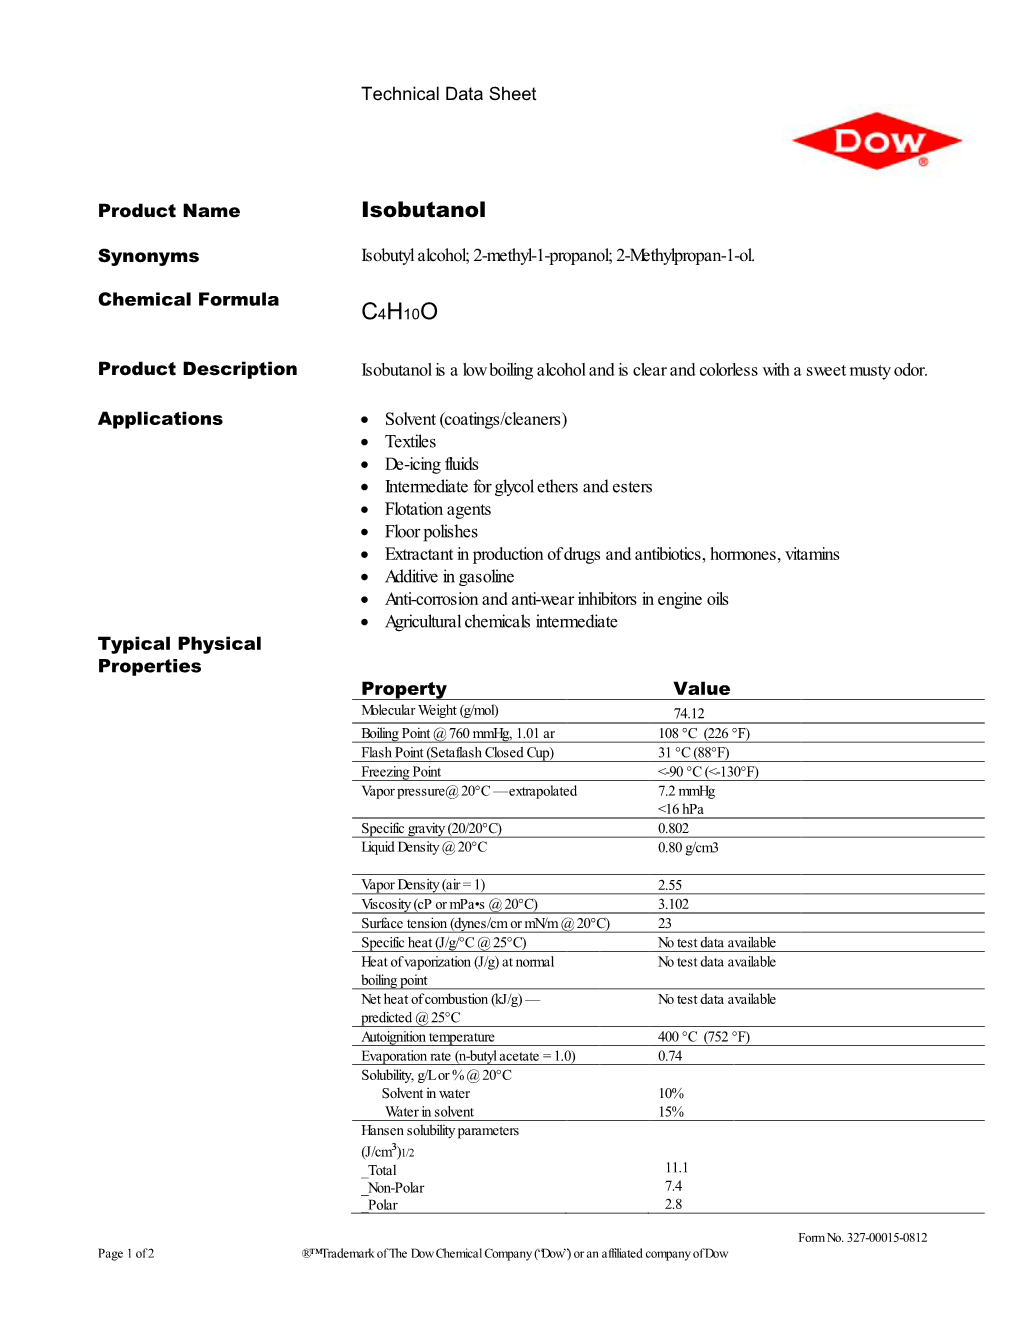 Isobutanol Technical Data Sheet